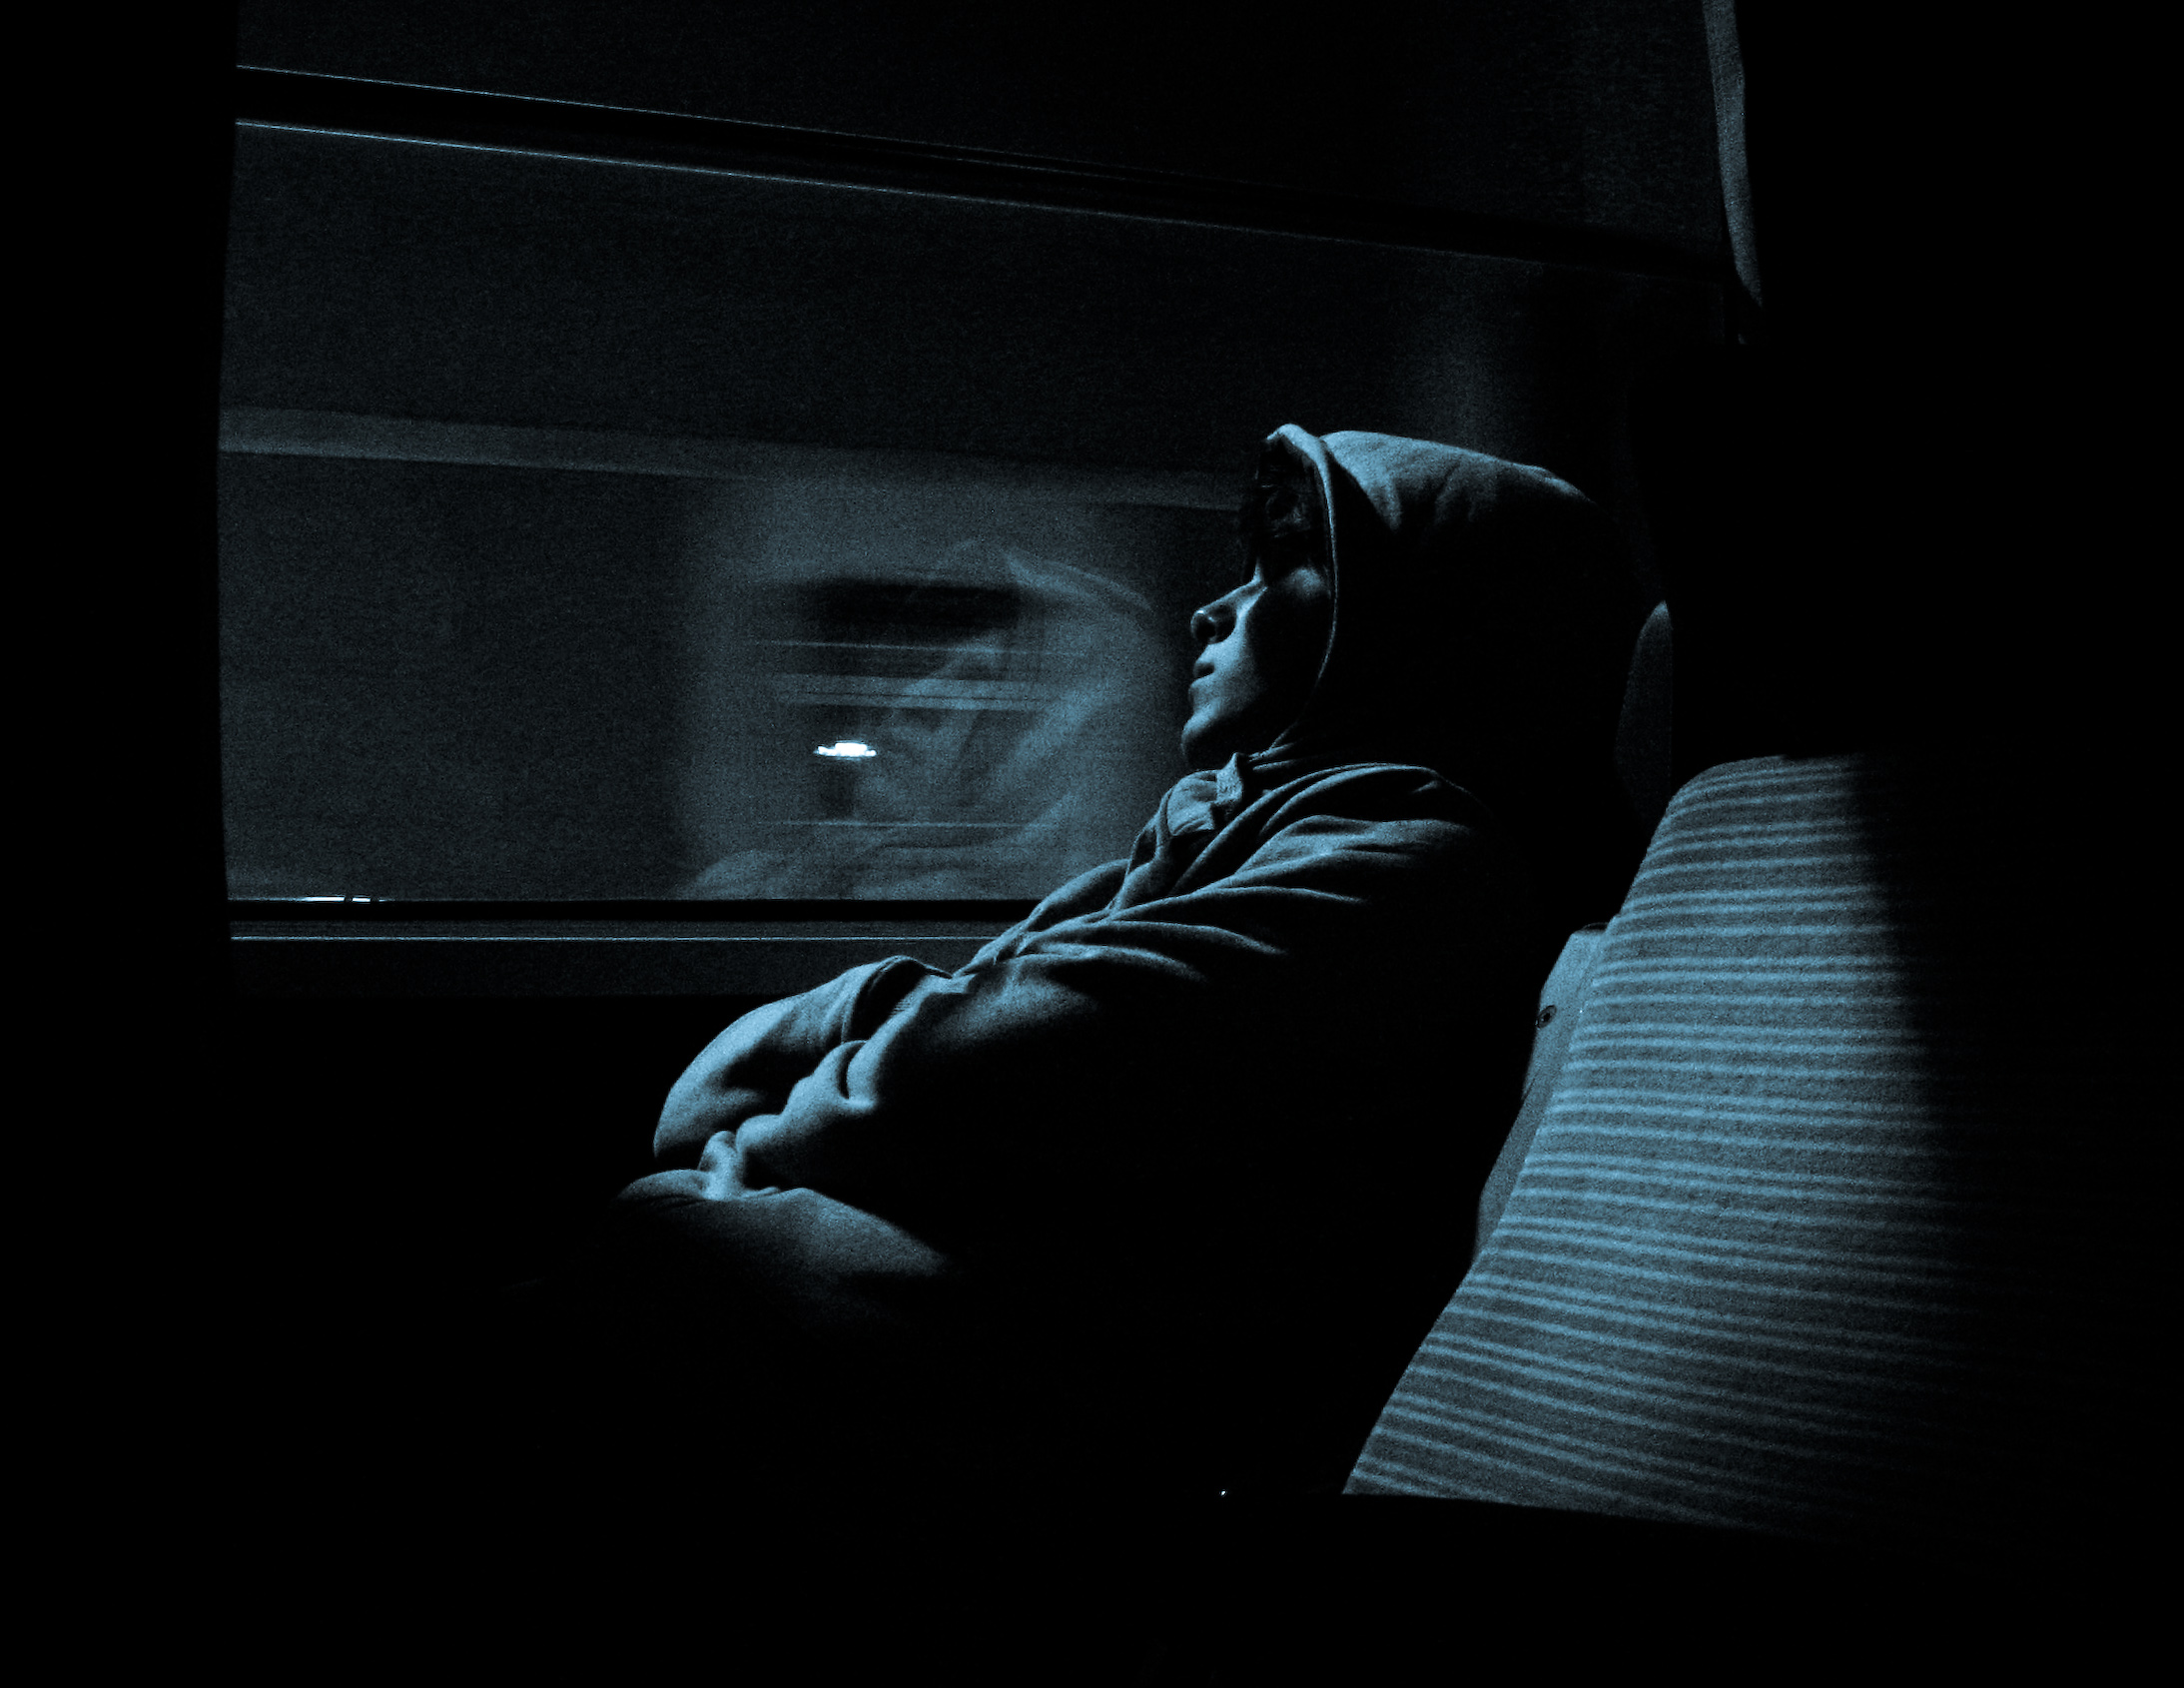 Dark Train Night Photography Reflection Face Low Light Monochrome Motion Blur 2187x1690